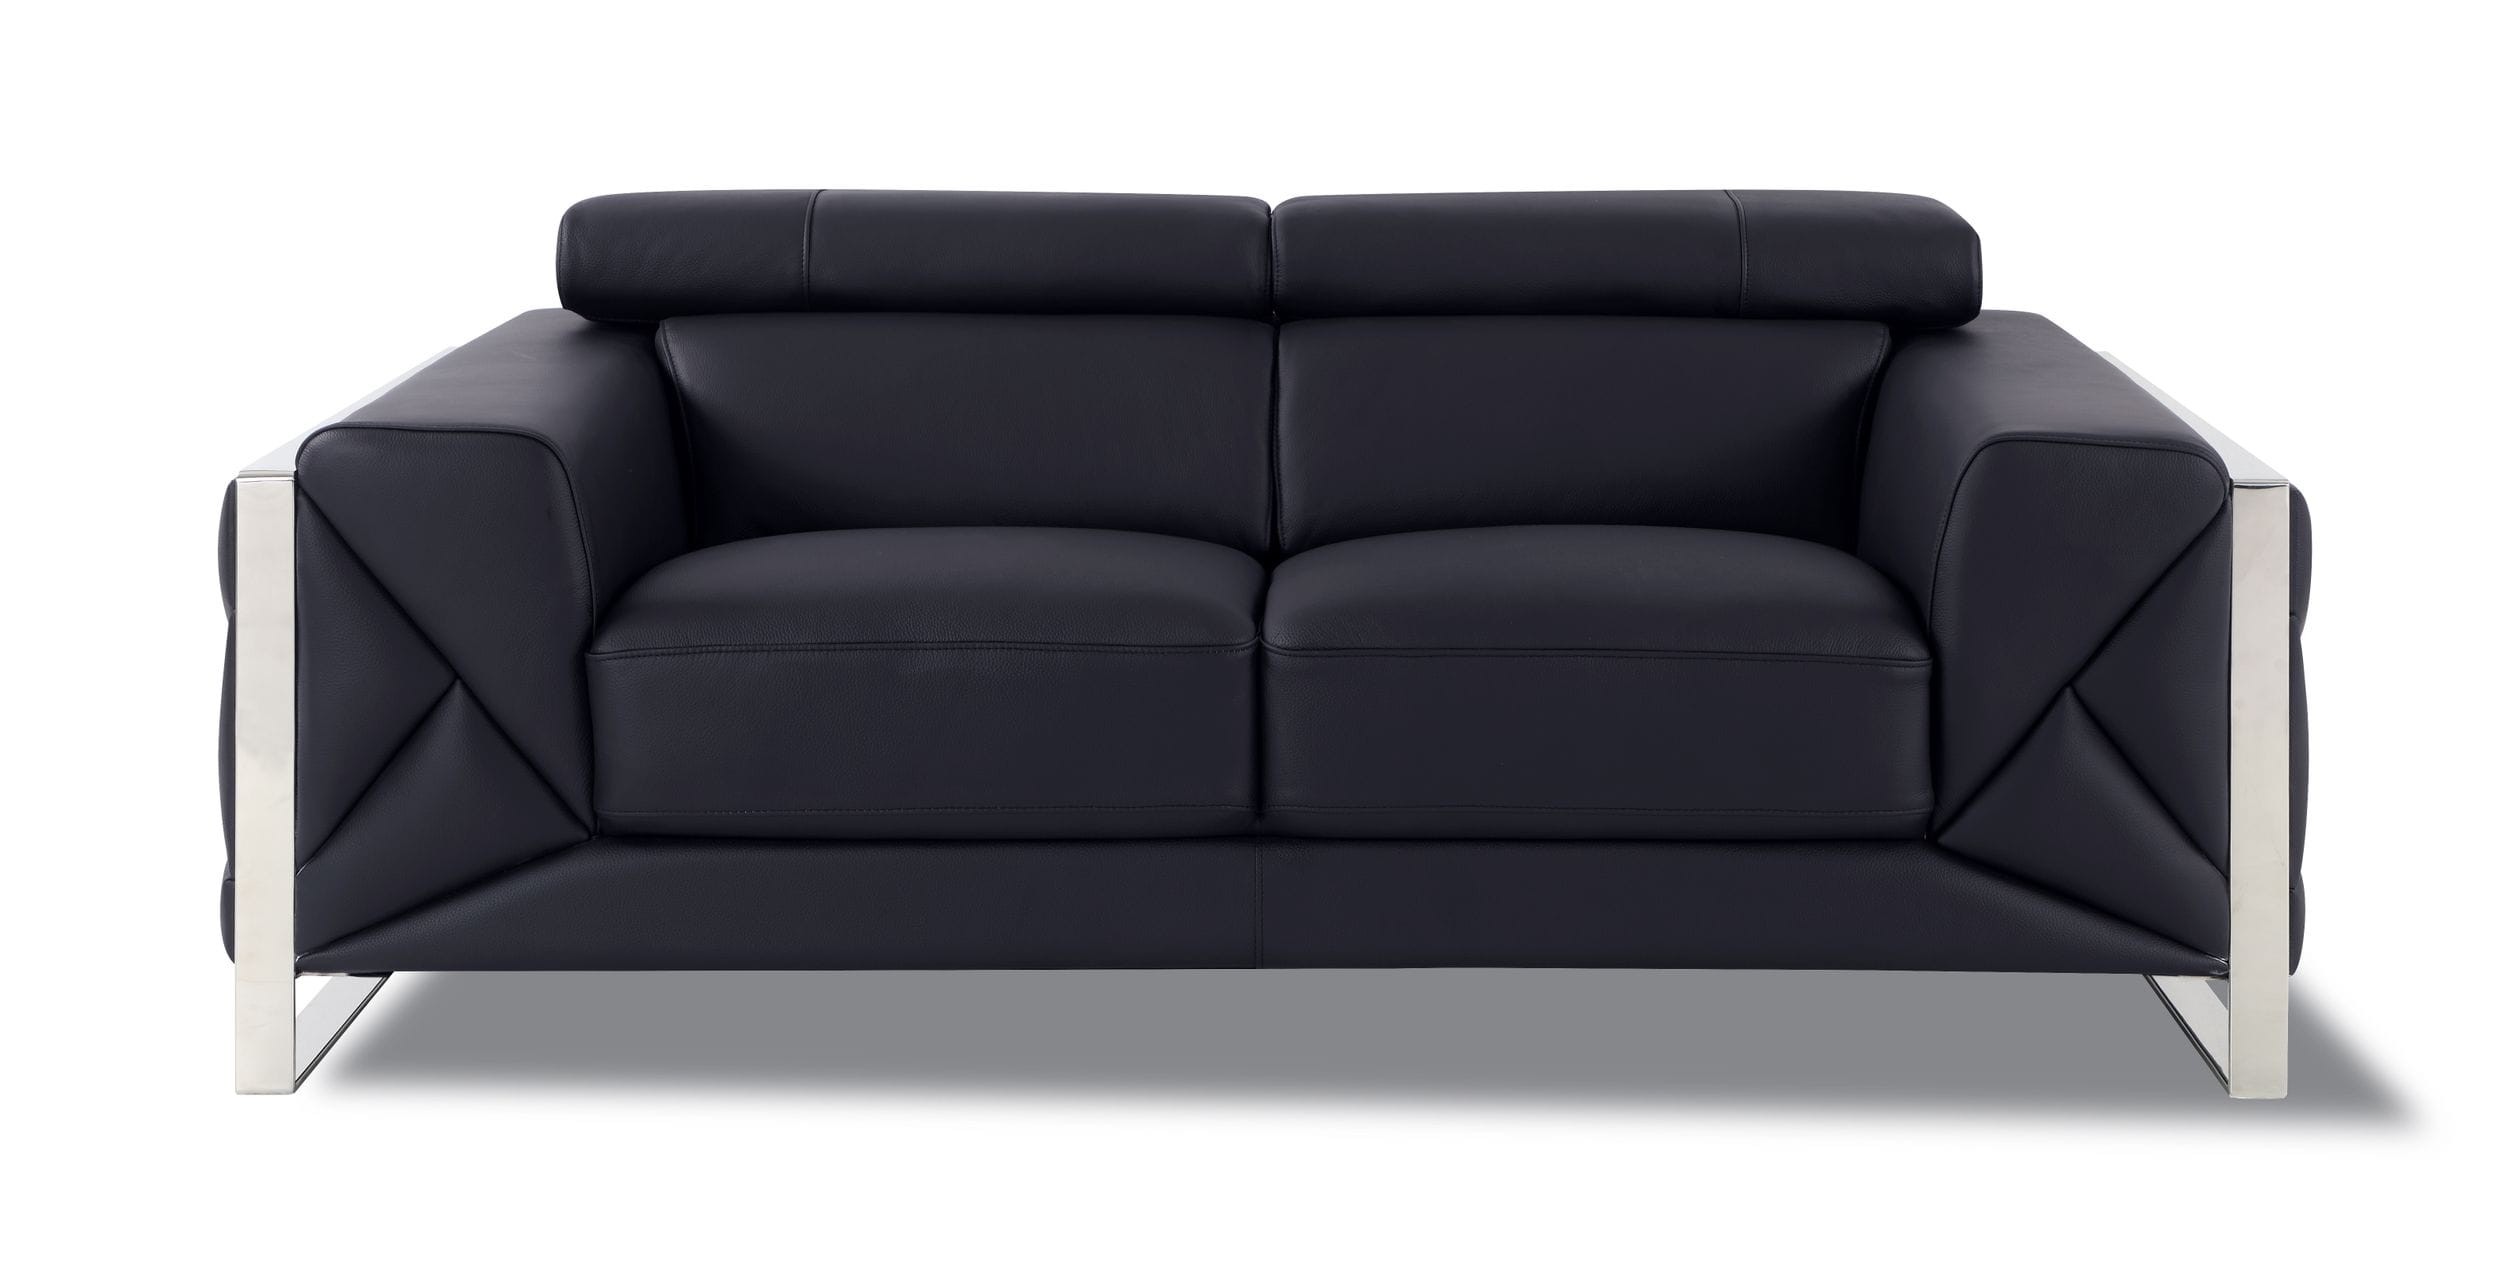 genuine leather sofa set in india